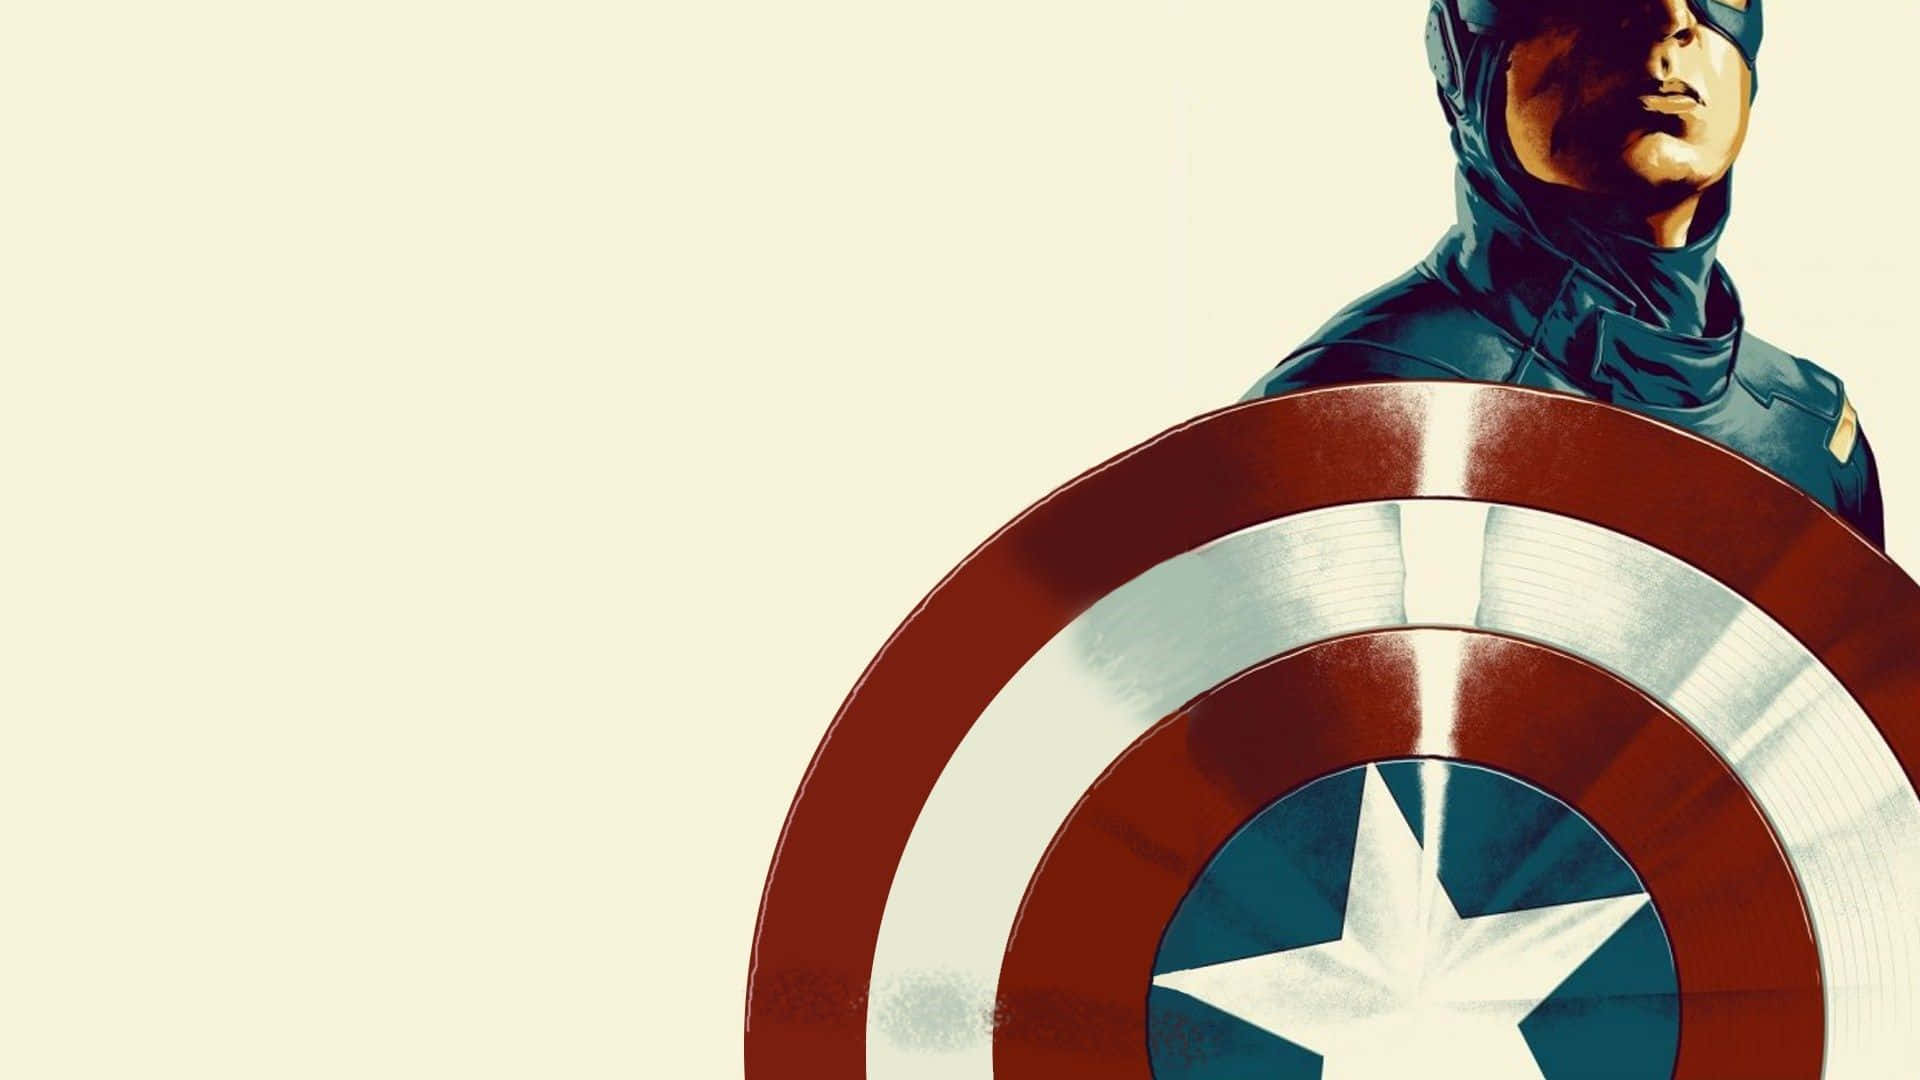 Retro Captain America ready to protect Wallpaper